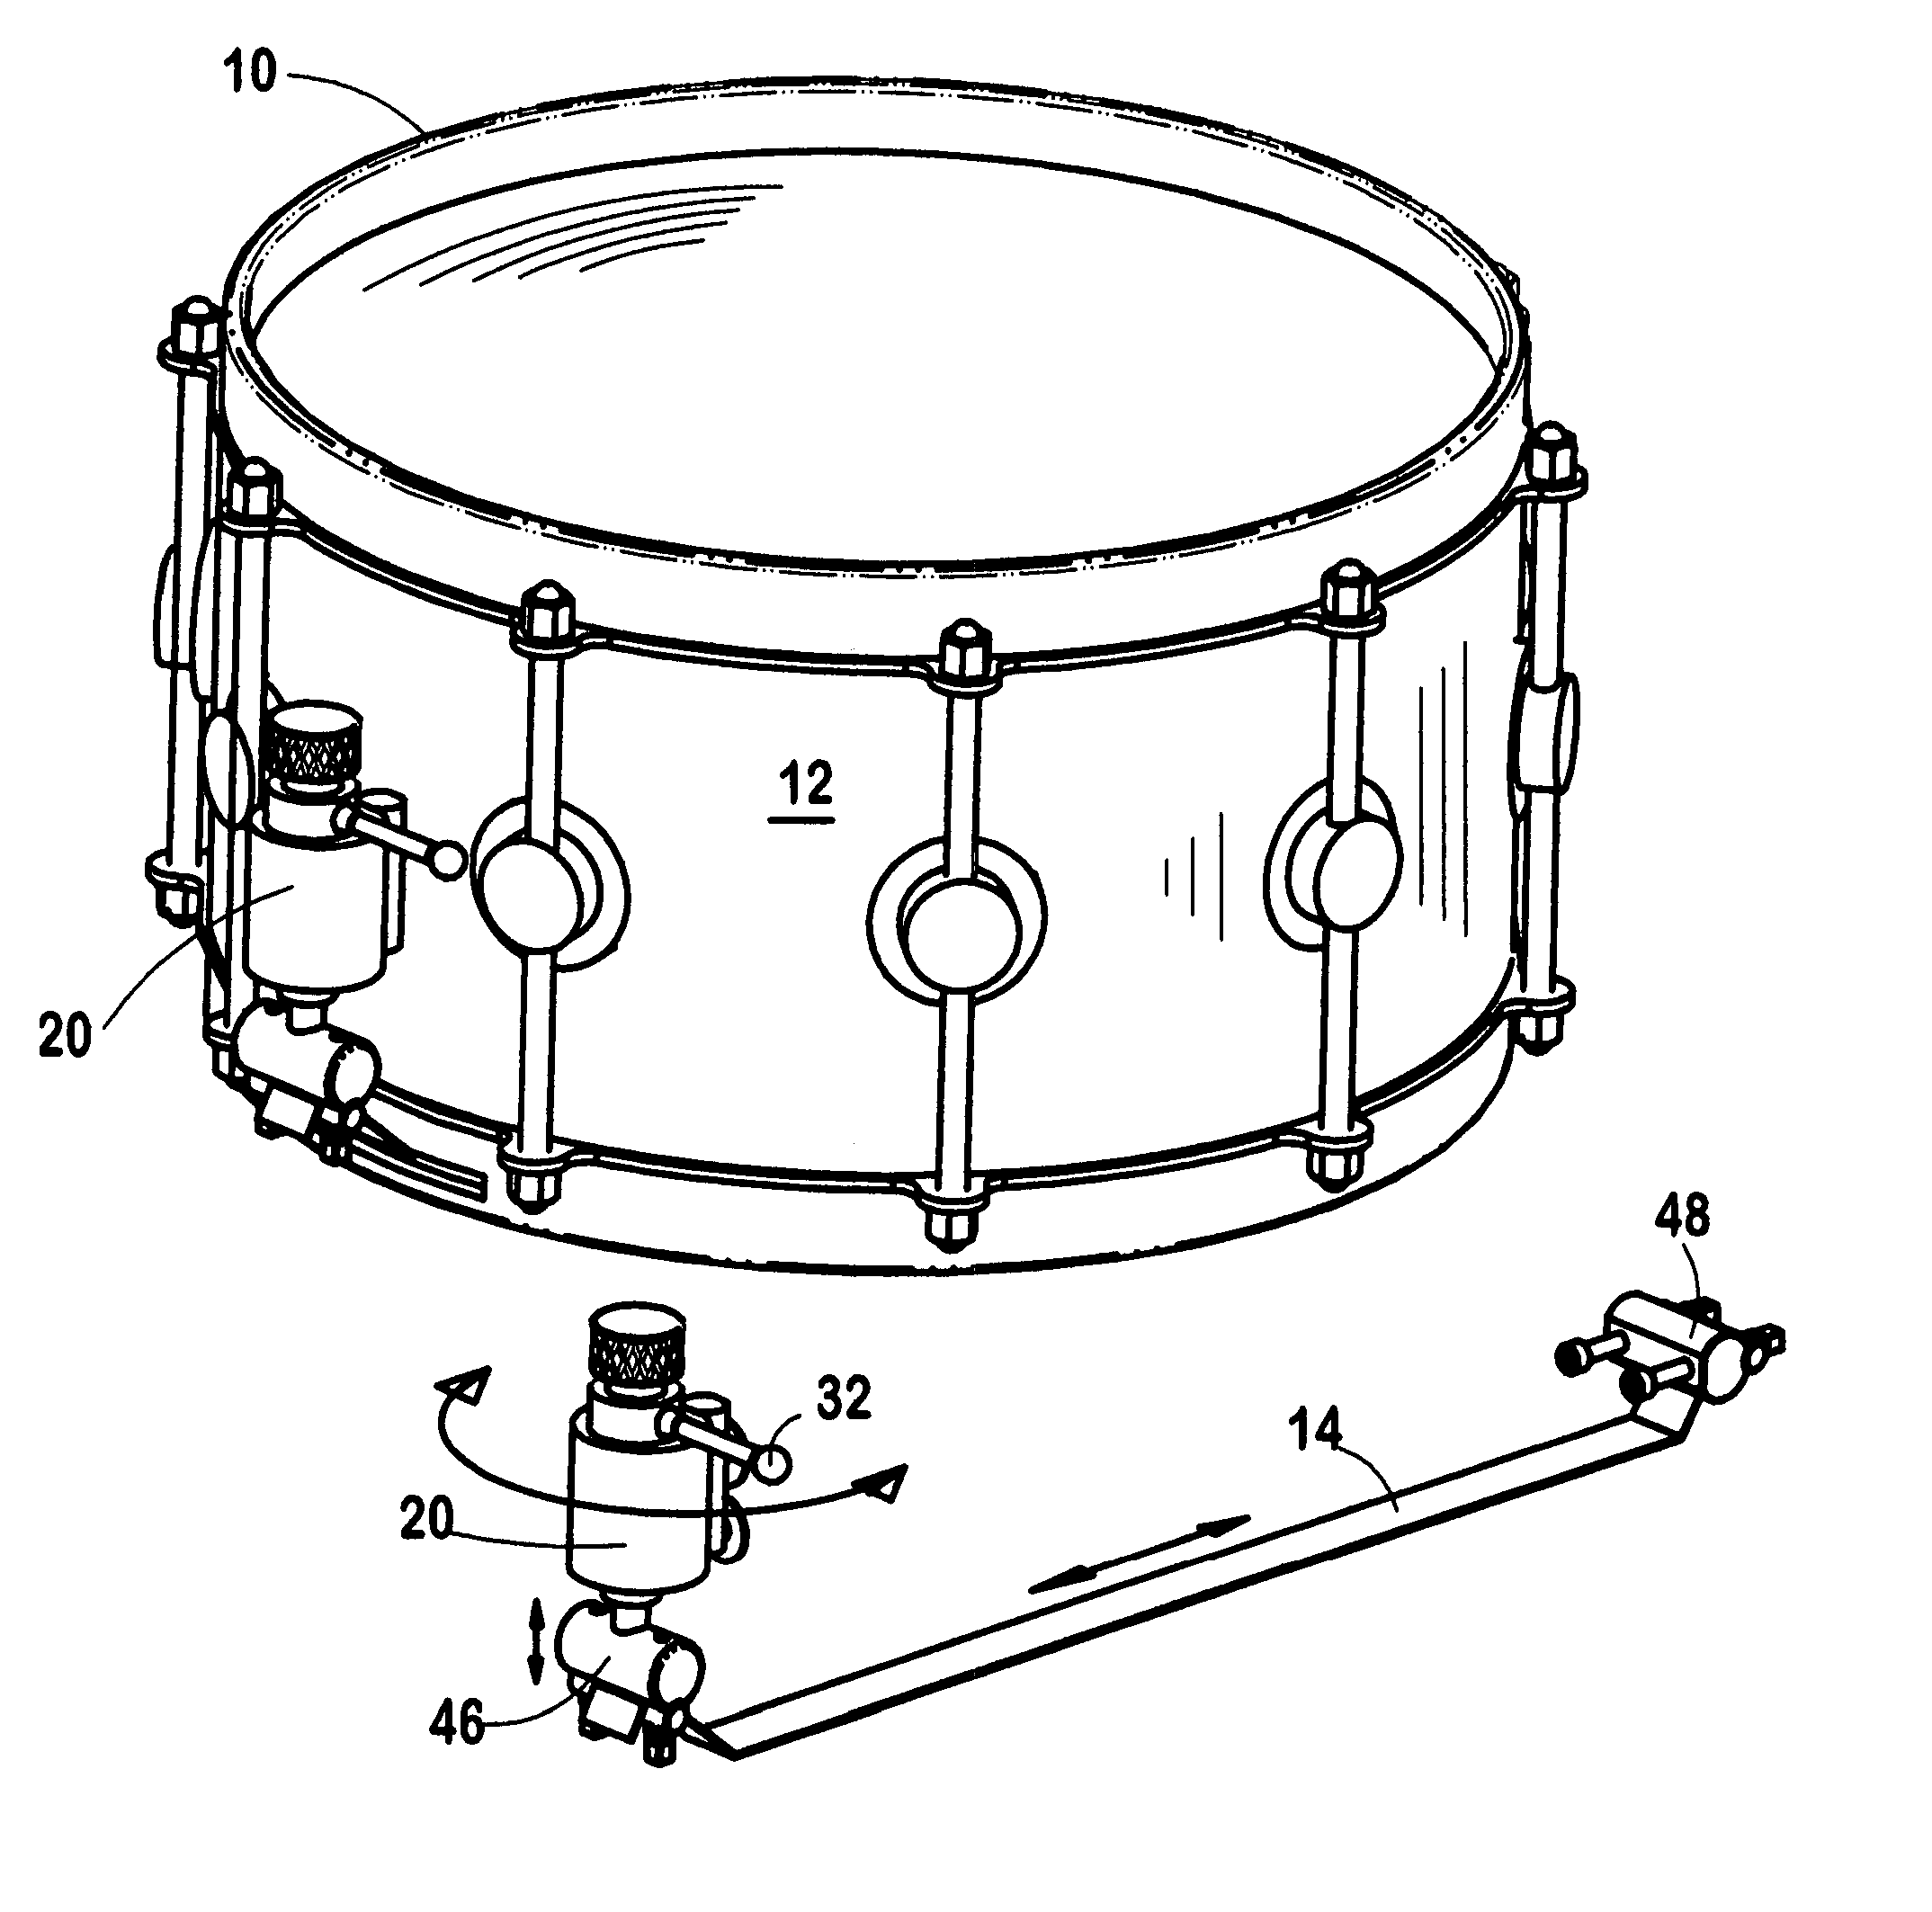 Snare drum accessory